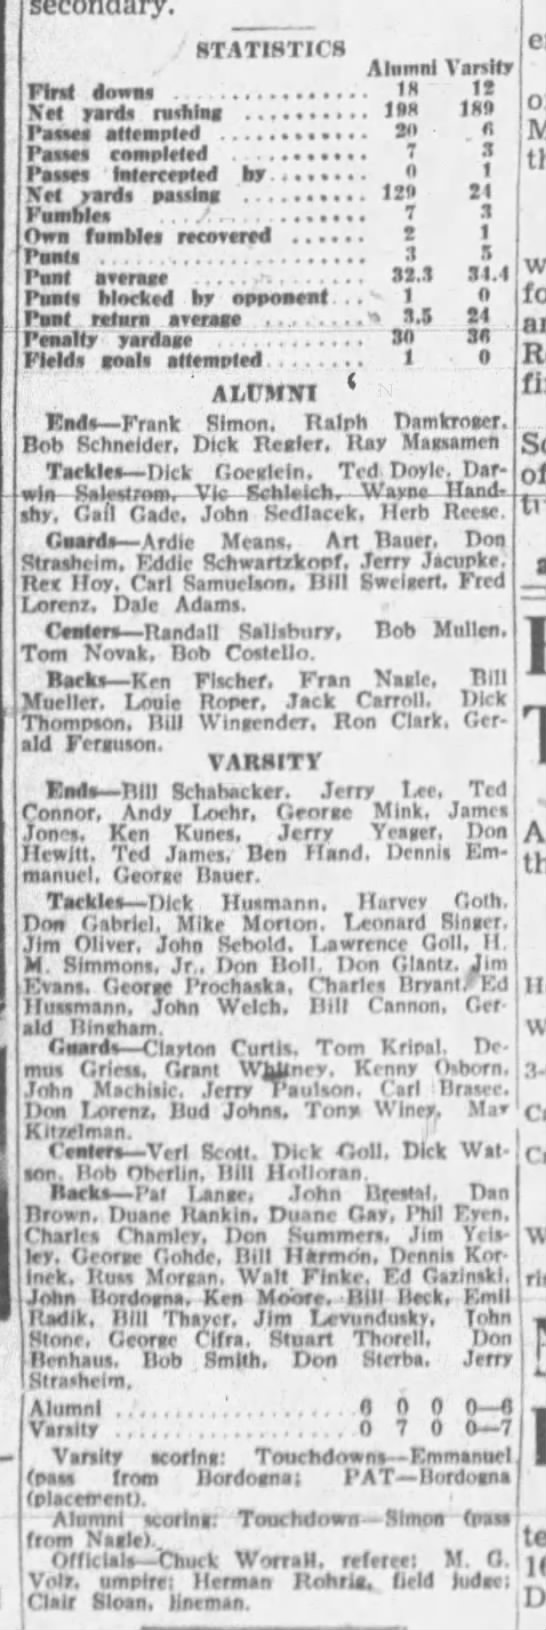 1952 Husker spring game rosters - 